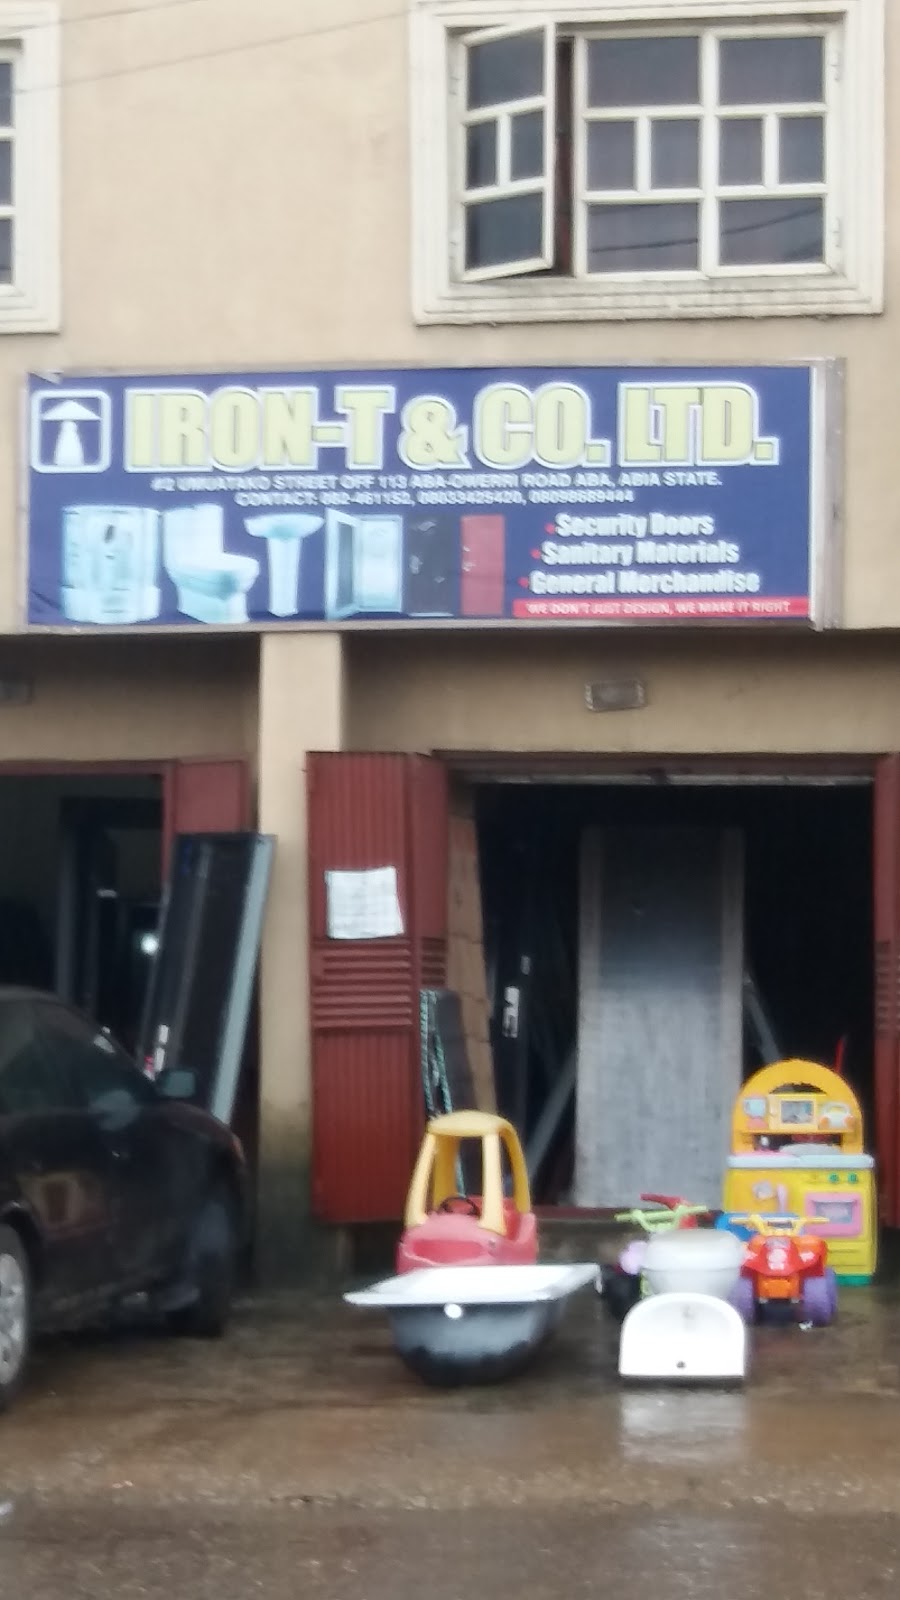 Iron-T & Co. Ltd.